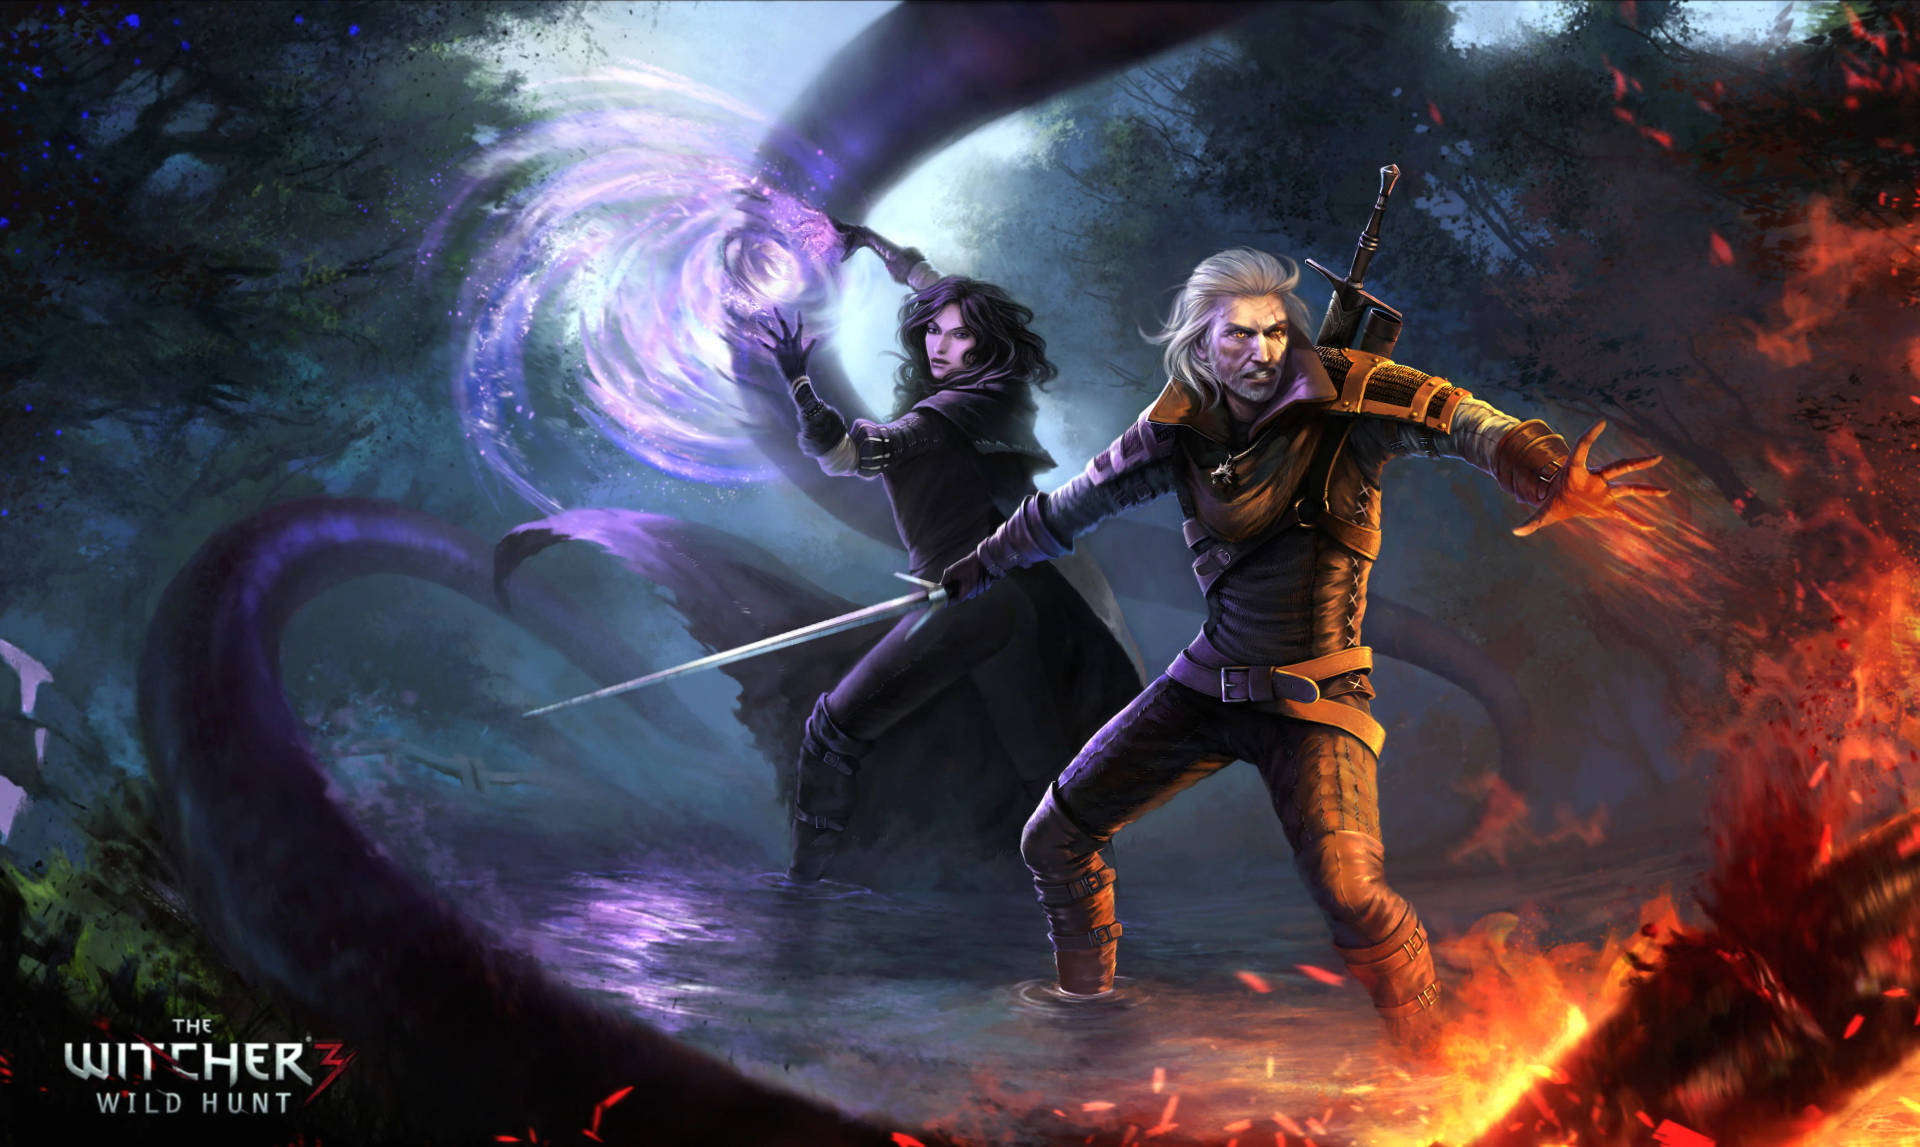 Witcher 3 4K Yennefer og Geralt Wallpaper: Wallpaper